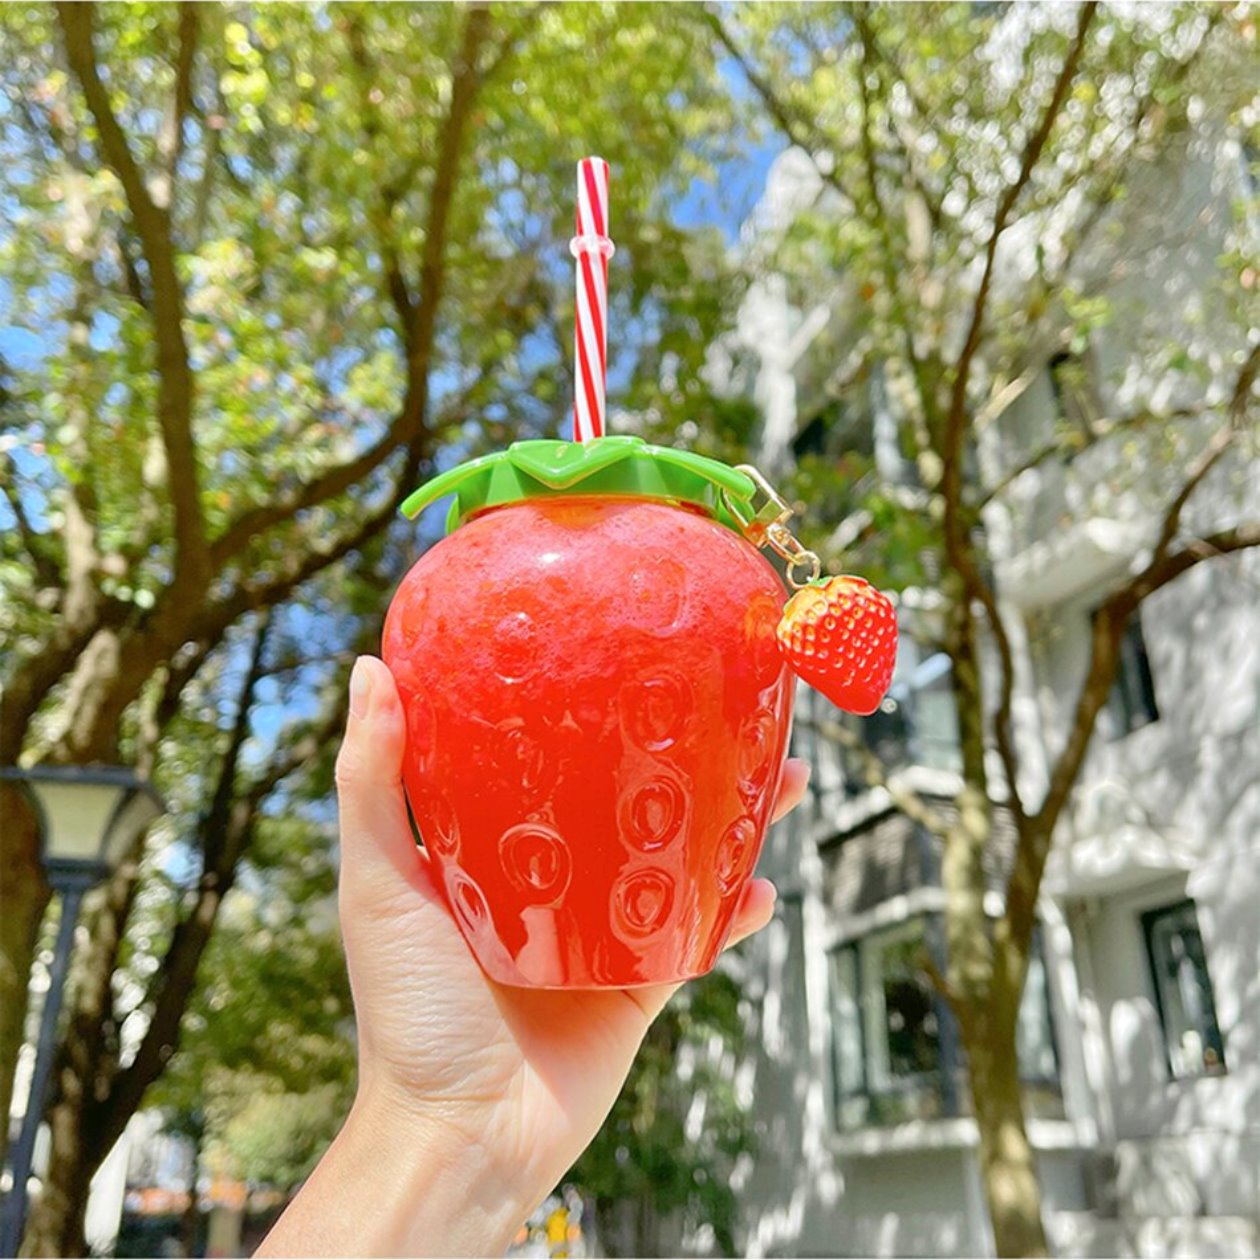 Cute Strawberry Cup with Straw – Kawaiies